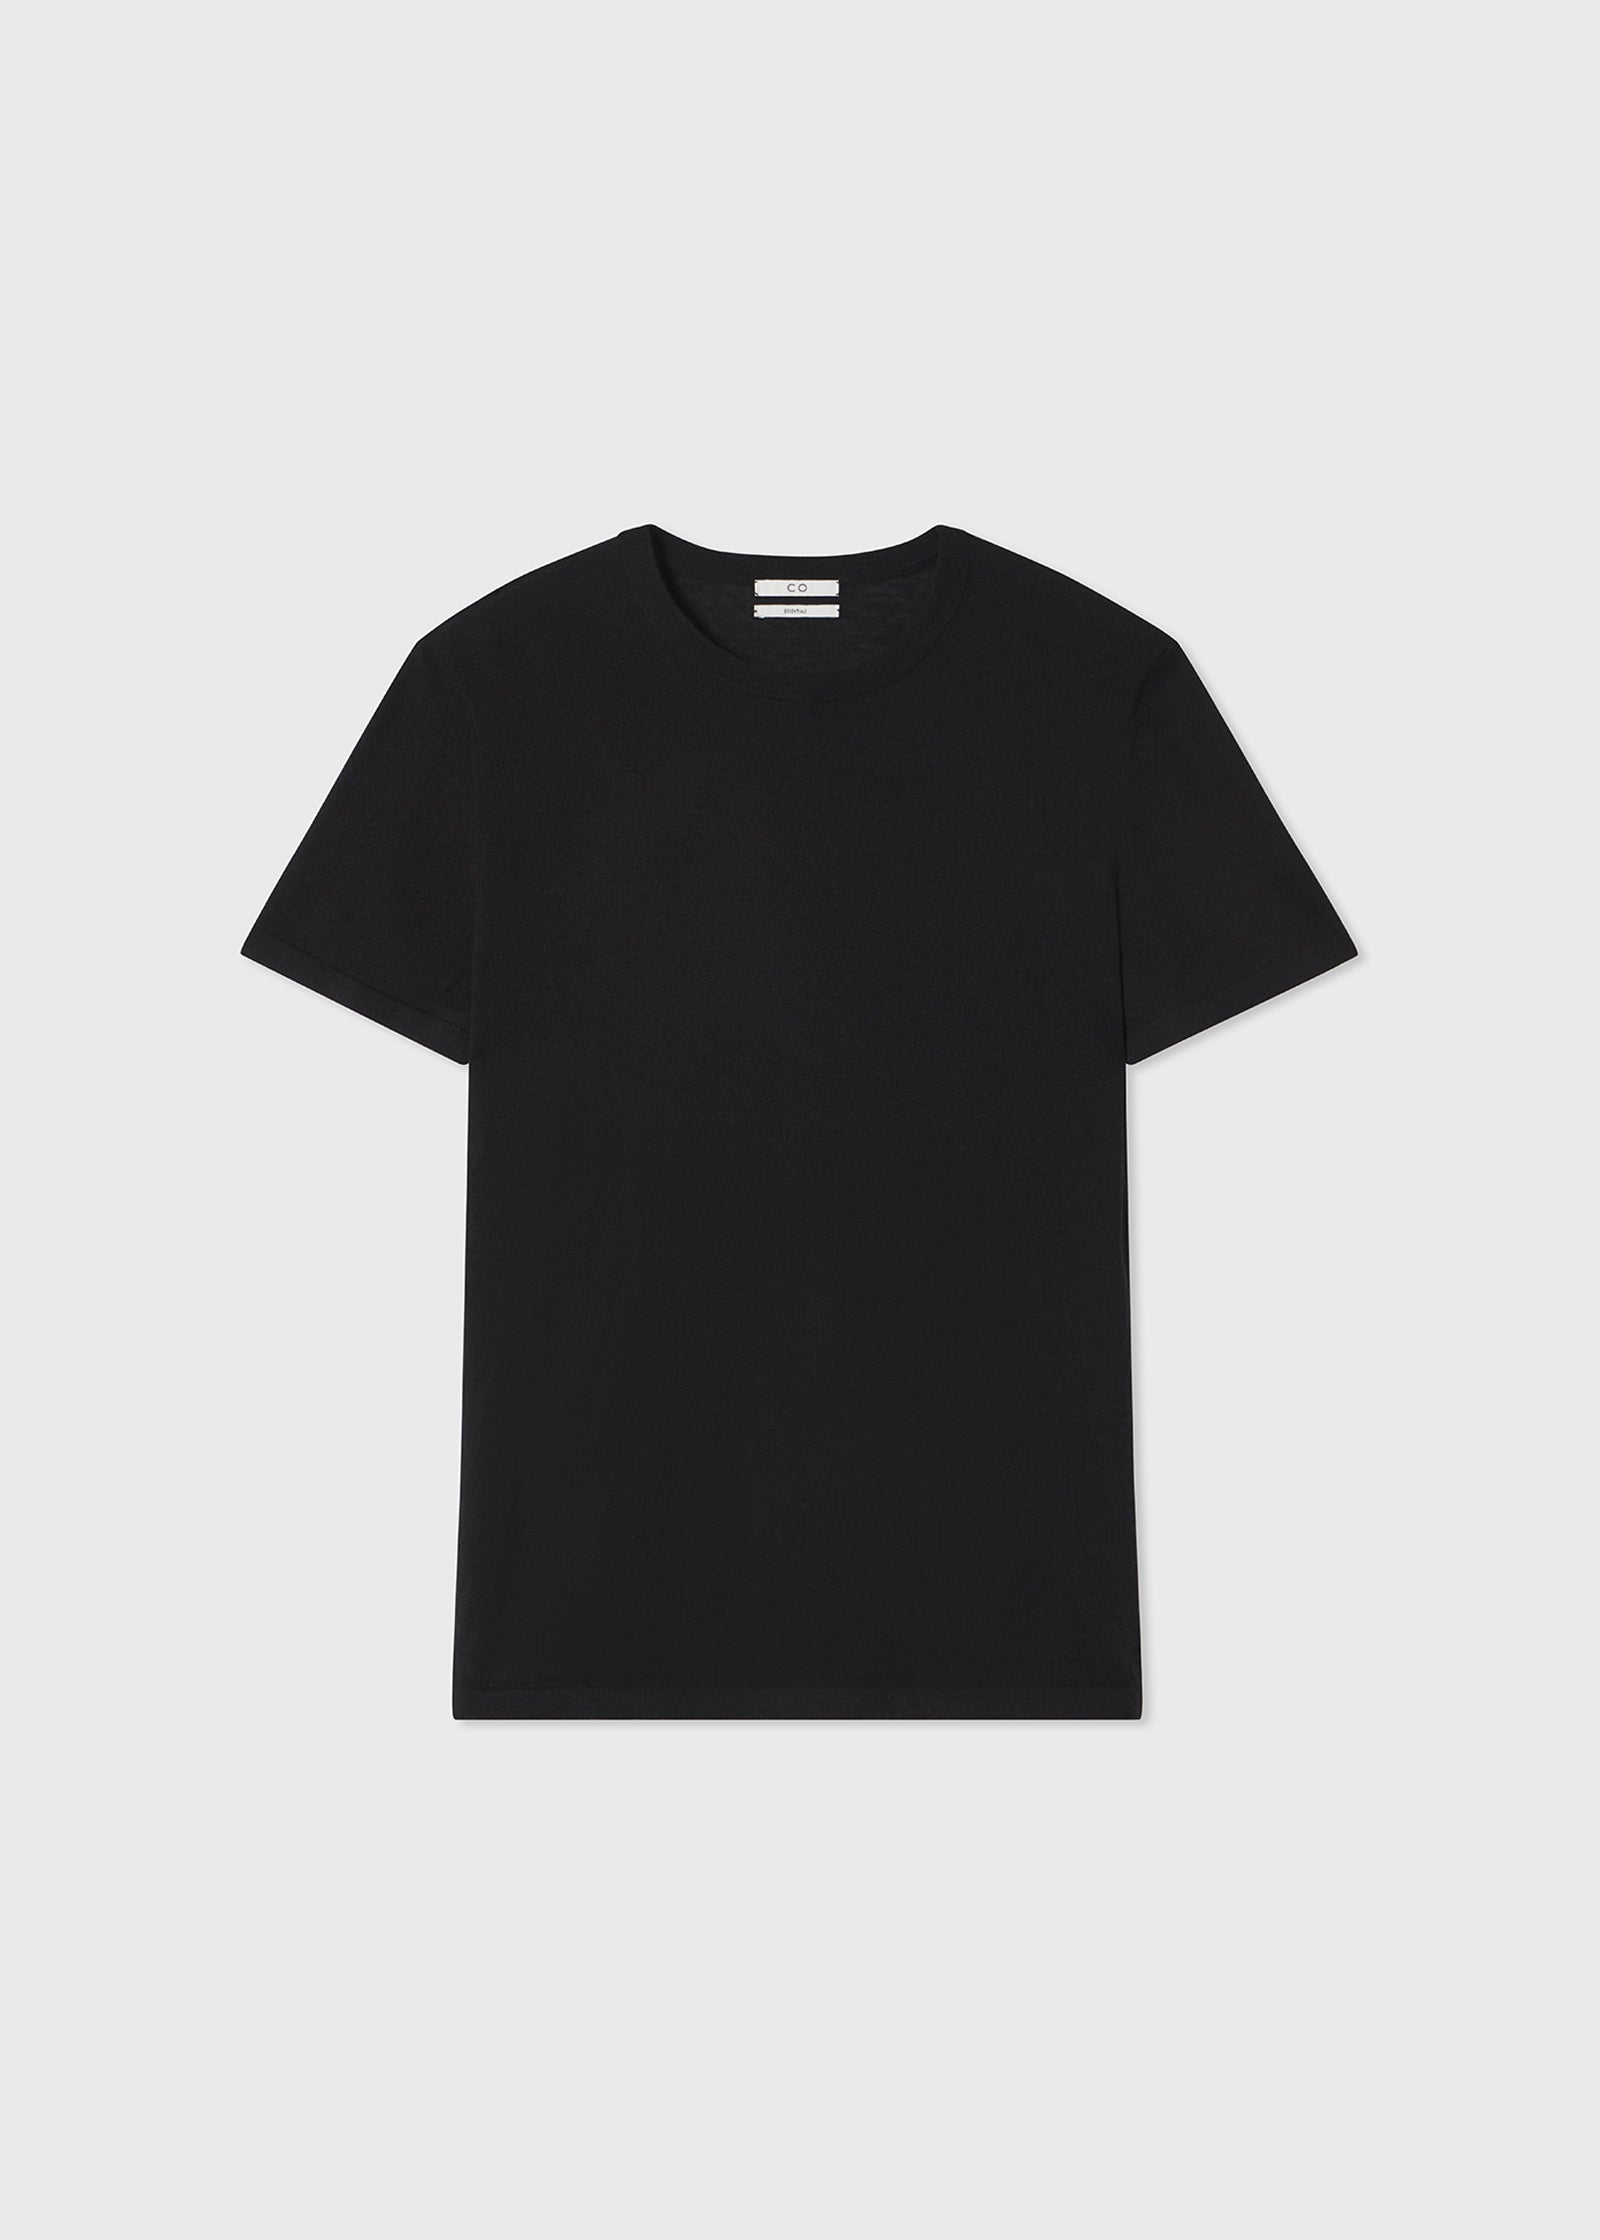 Cashmere t-shirt Chanel Black size M International in Cashmere - 30041561